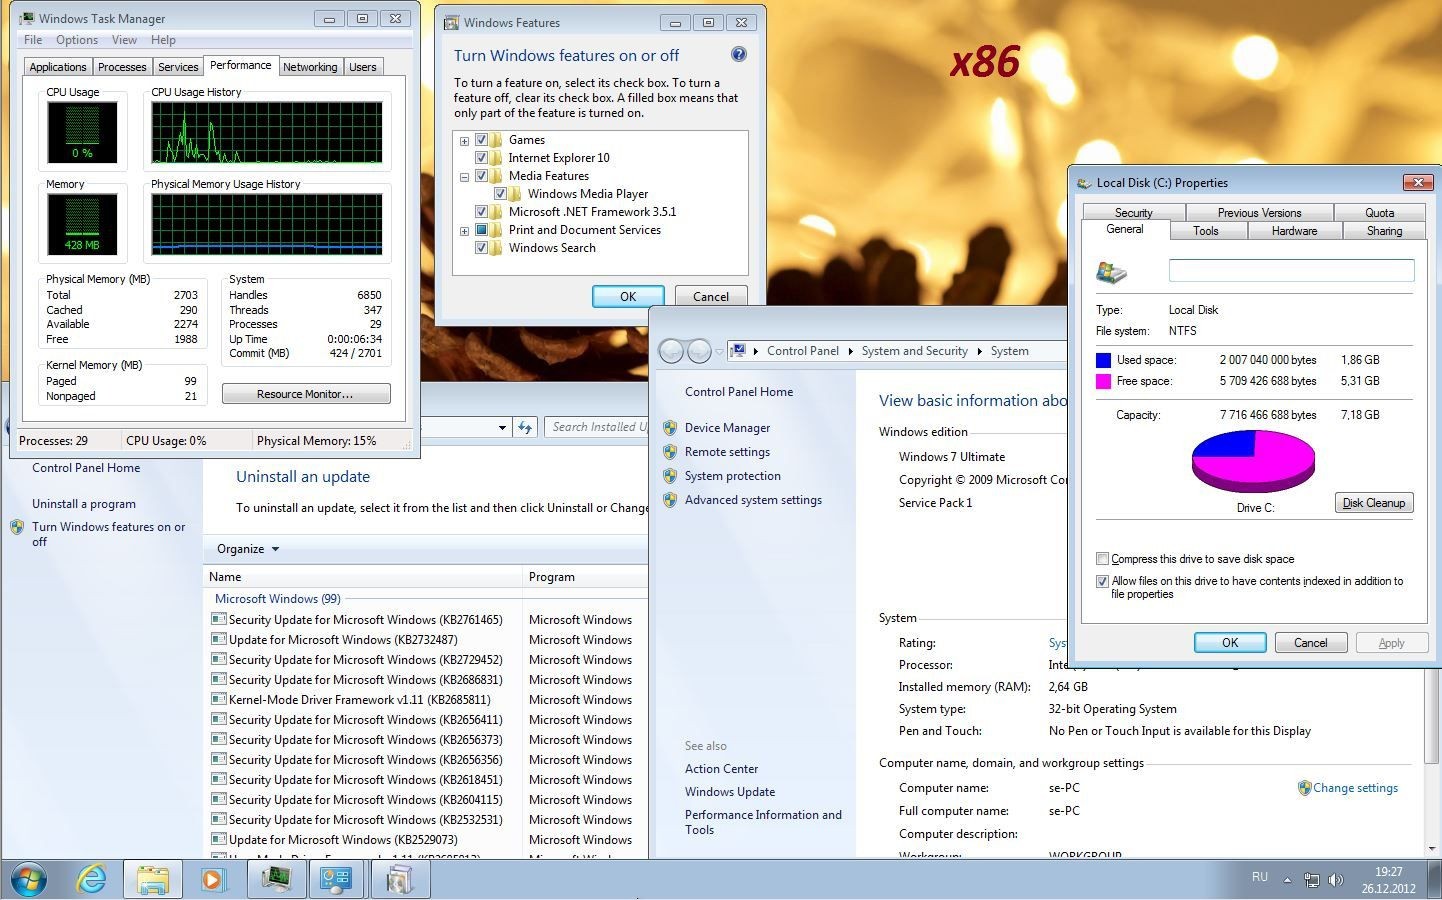 Windows 7 Ultimate SP1 x86/x64 DoomsDay SE (2012/RUS/ENG)